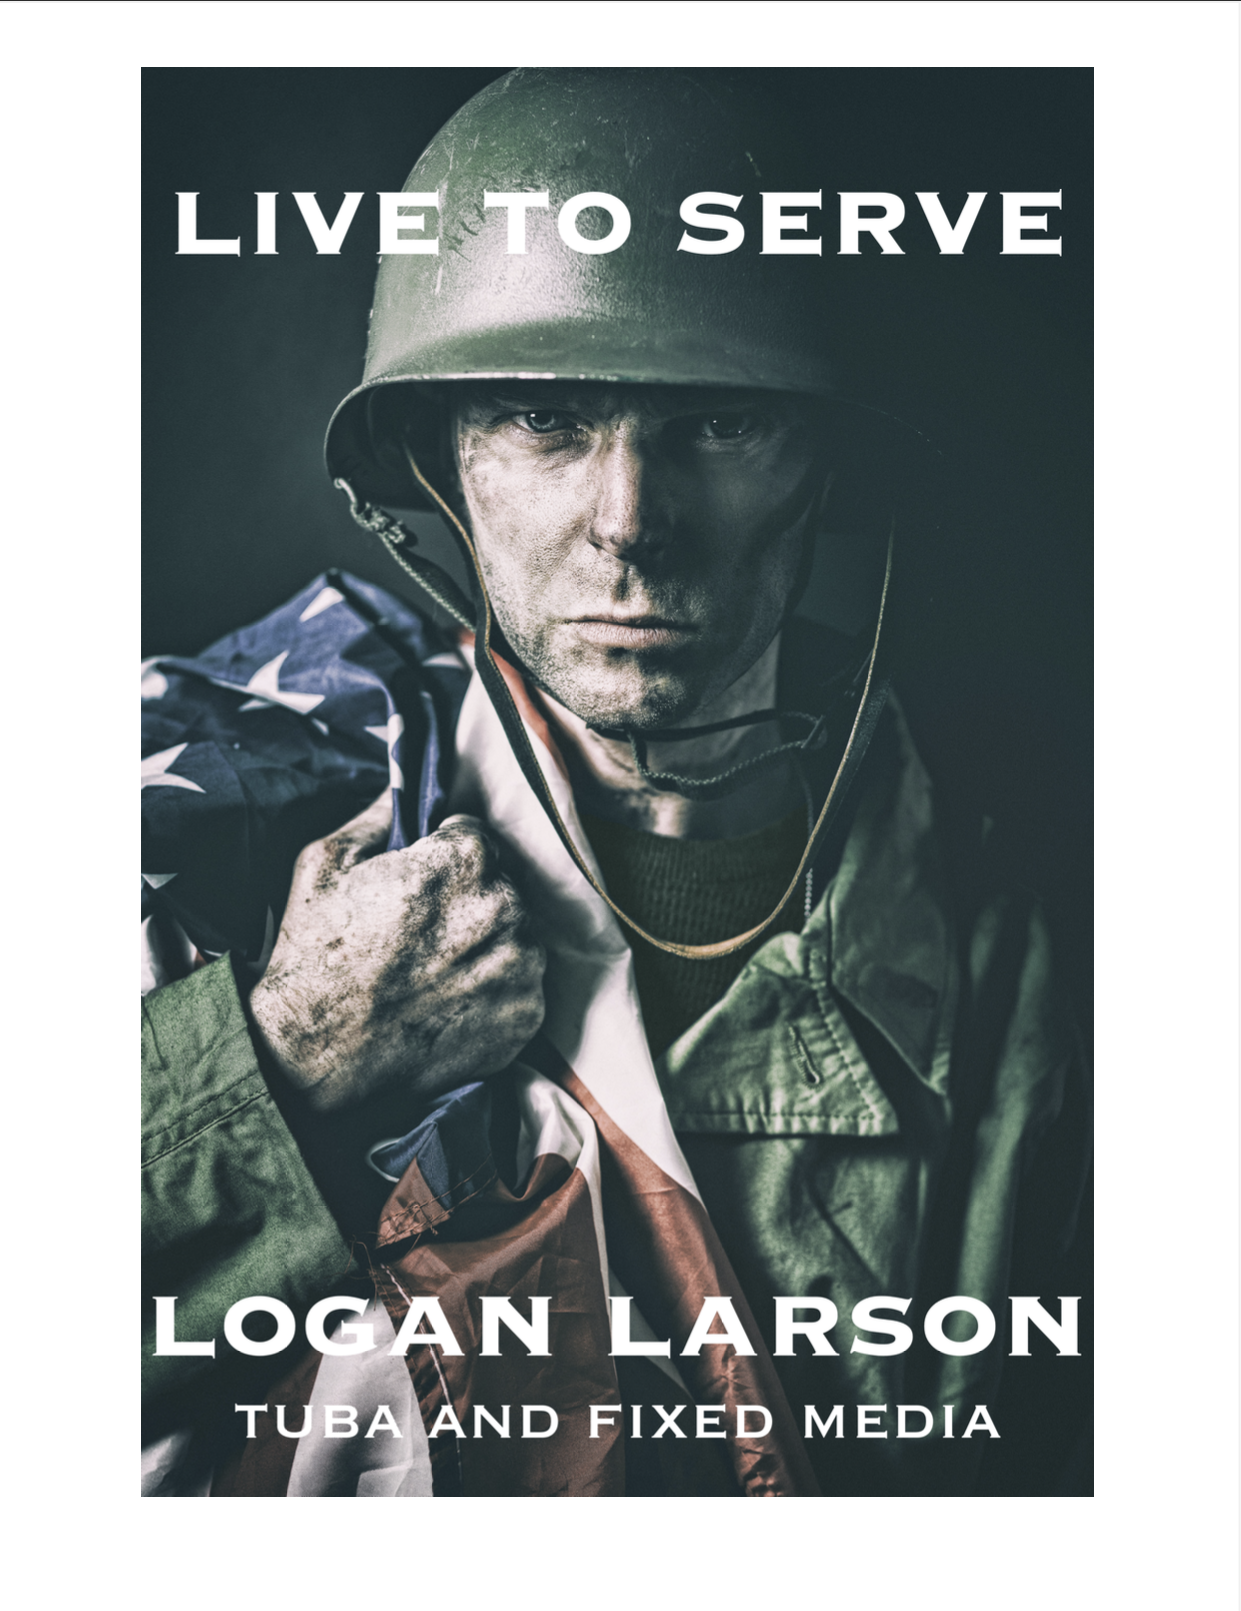 Live To Serve by Logan Larson